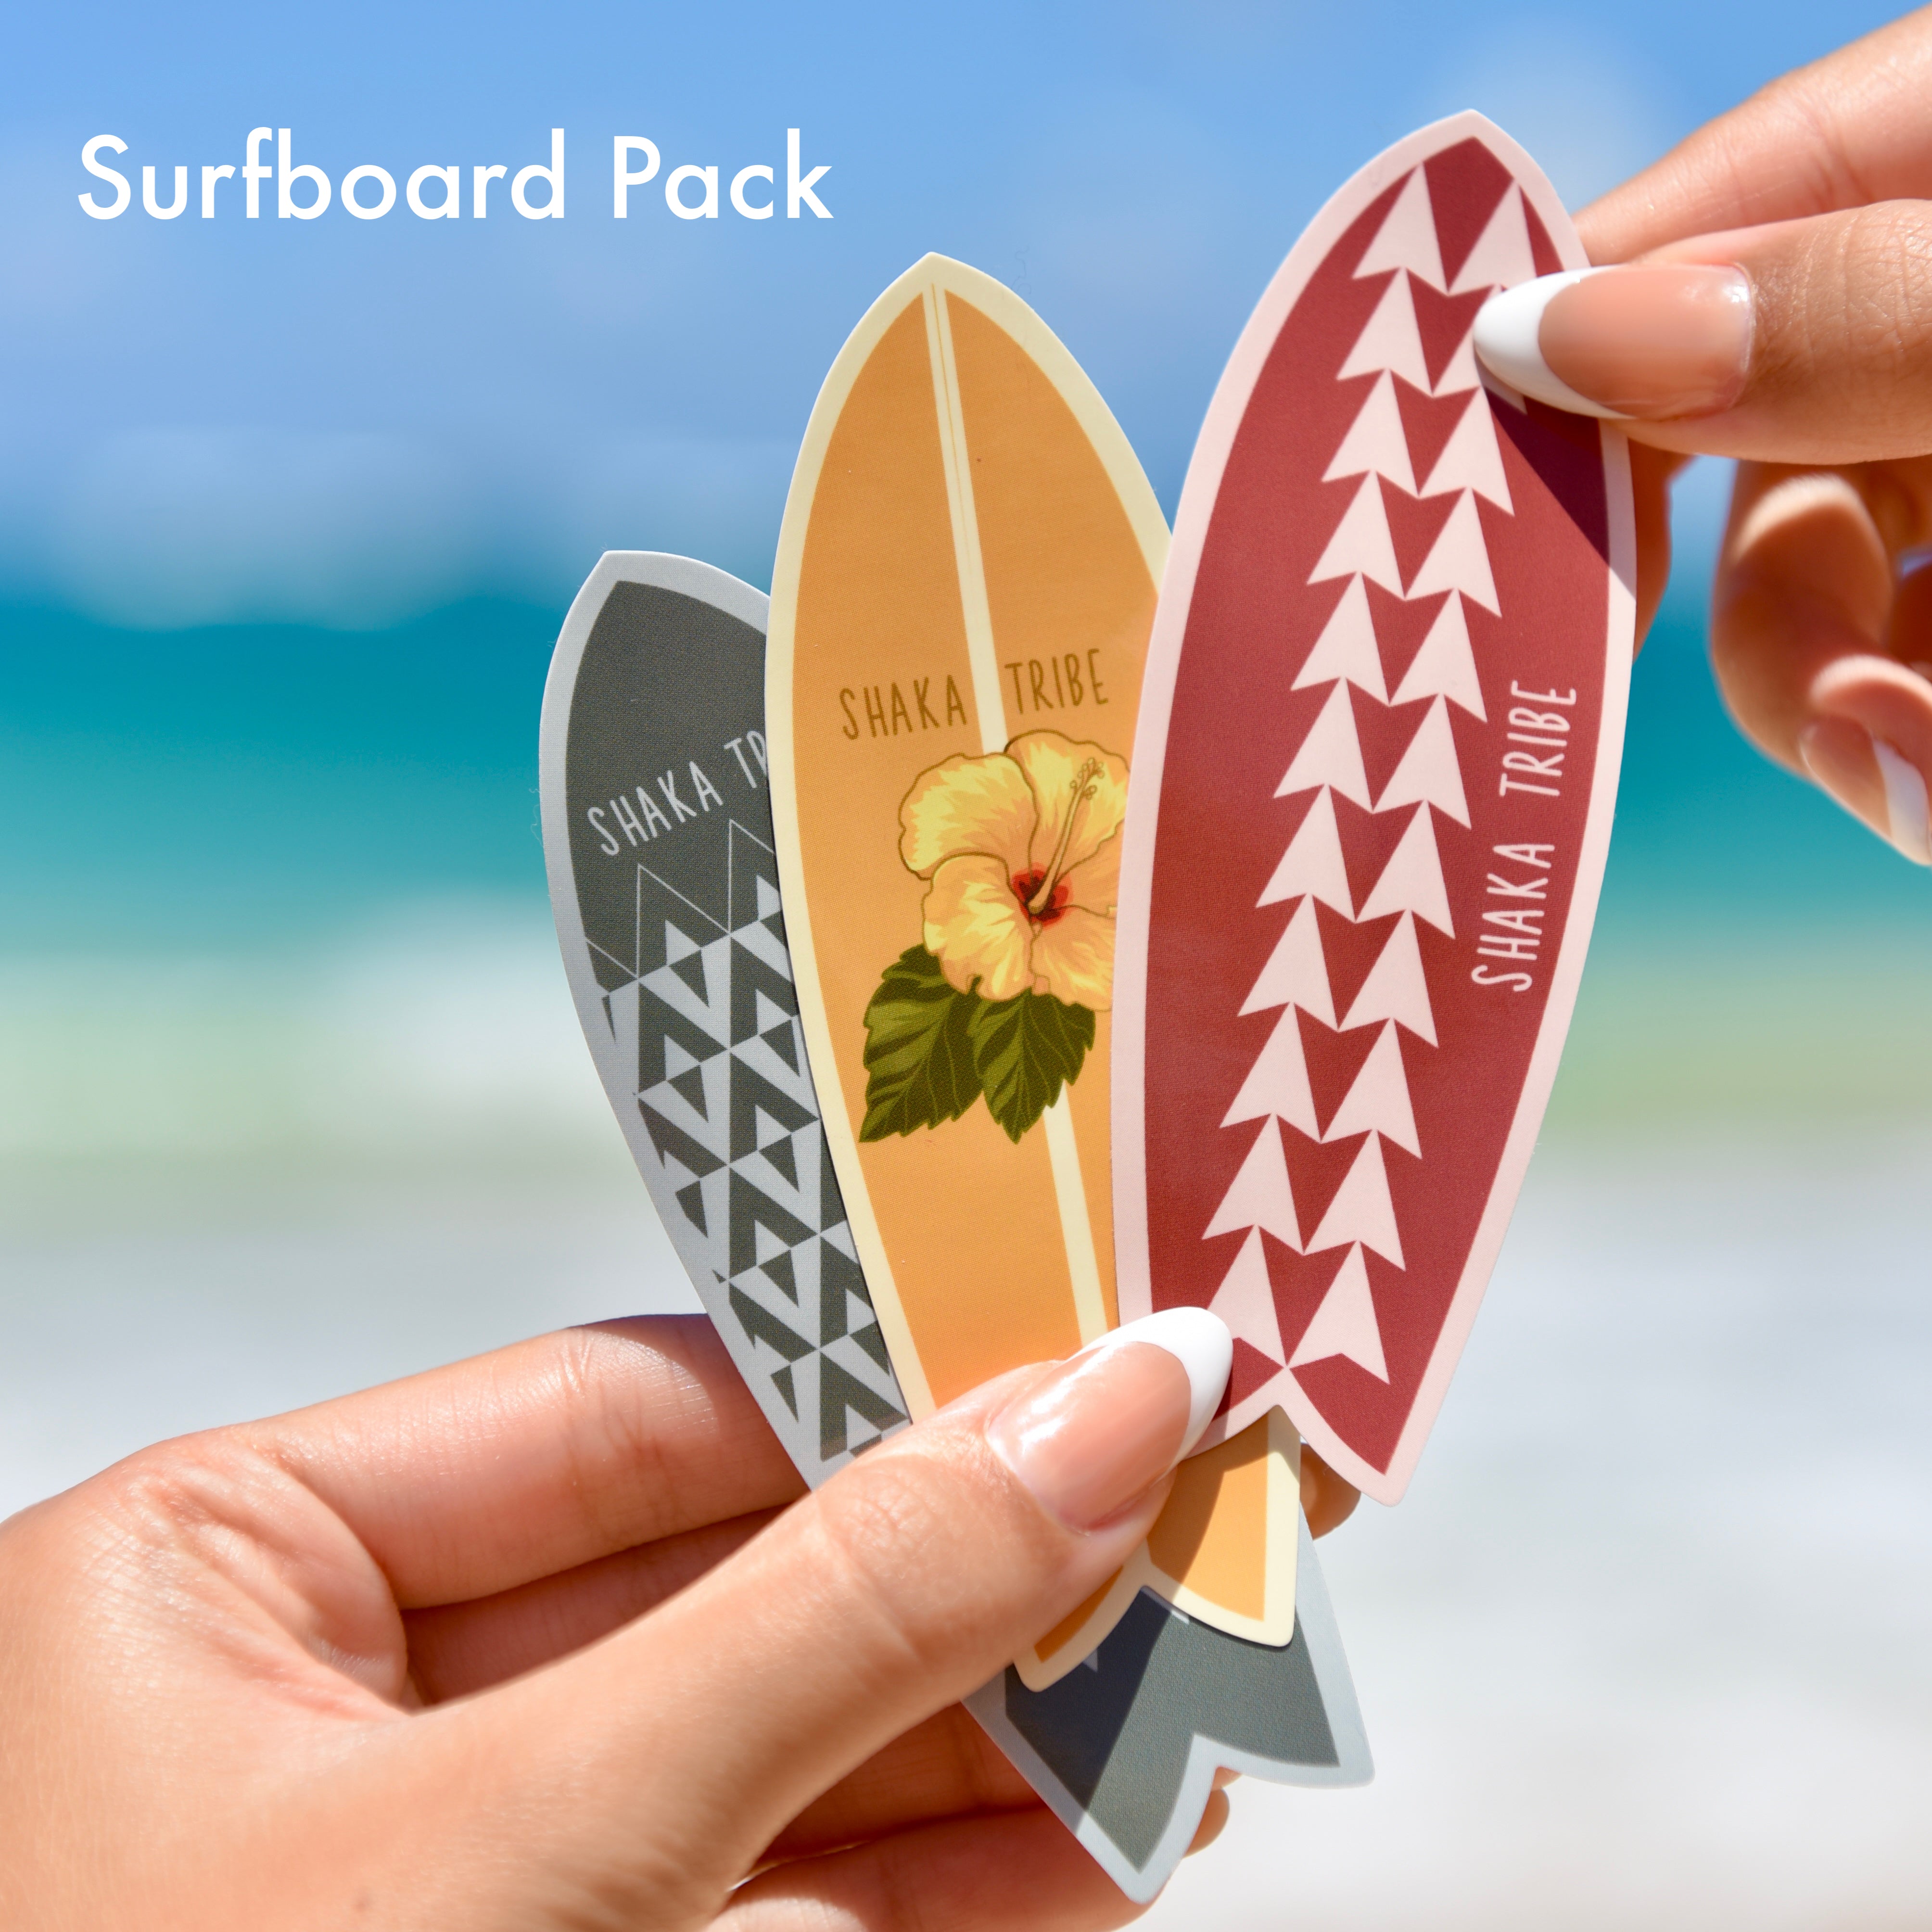 Surfboard Pack- Surfboard Stickers